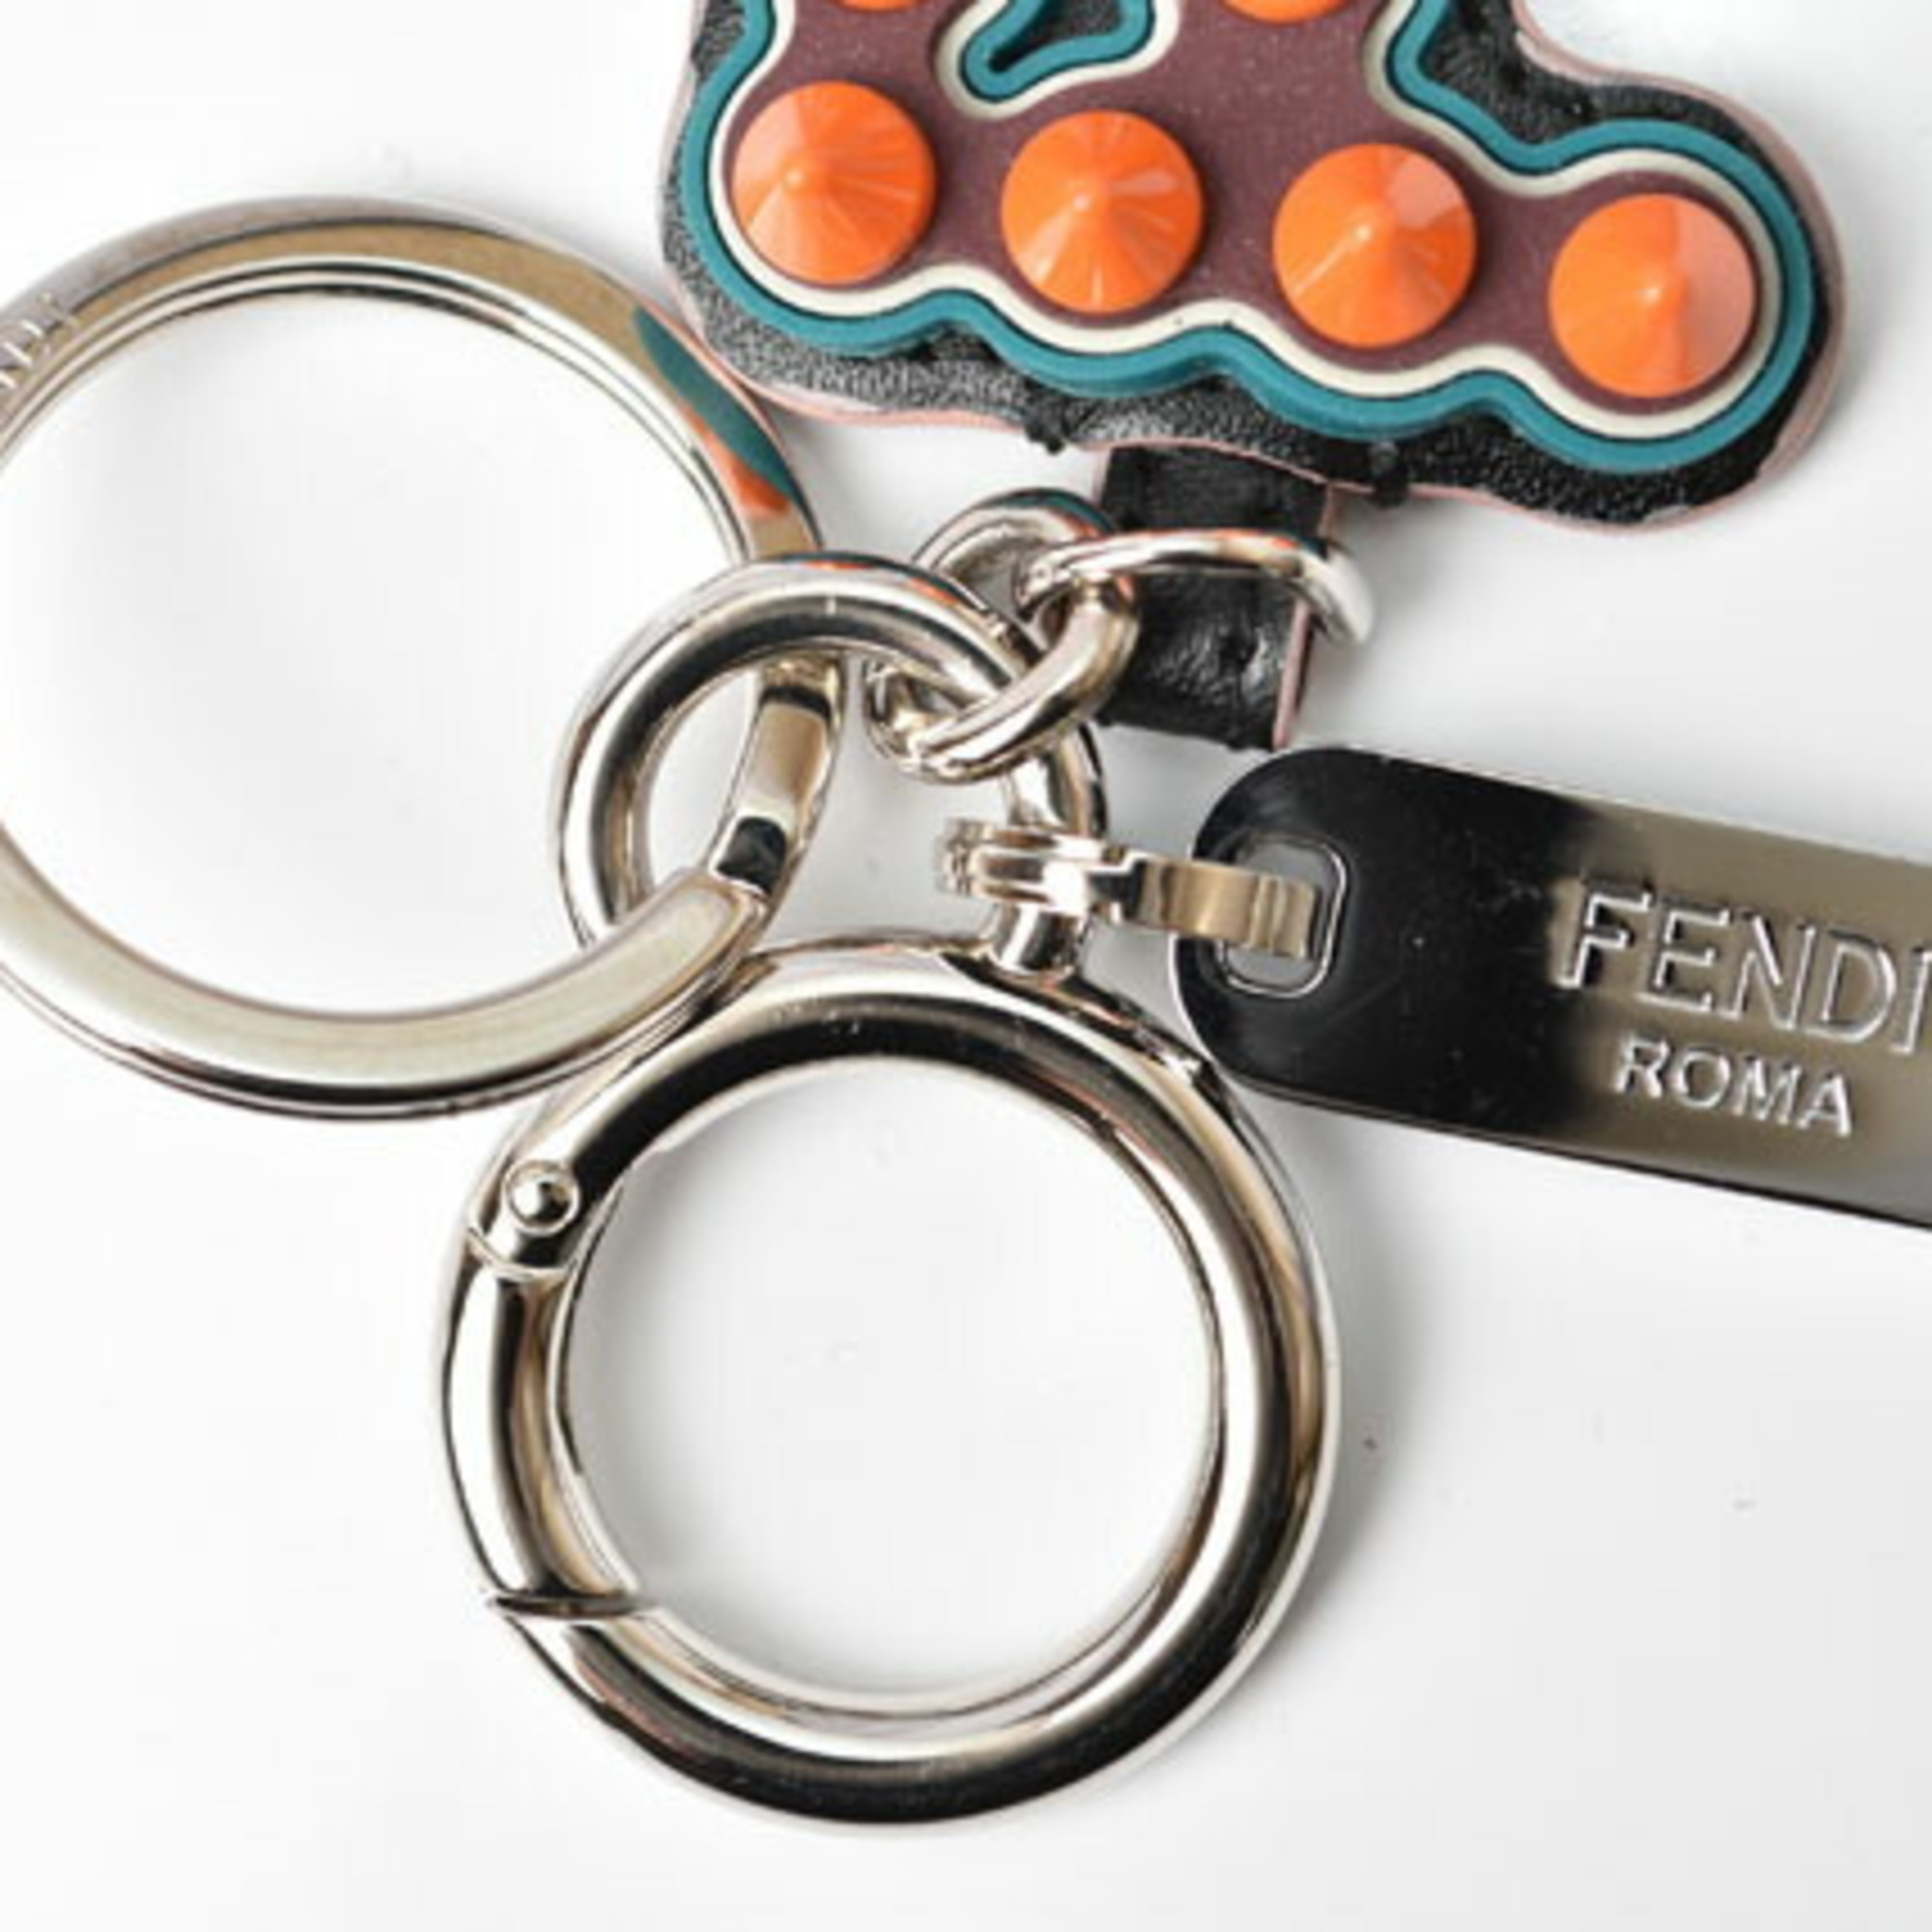 FENDI Keychain Keyring Bag Charm Motif Rubber Leather Multicolor